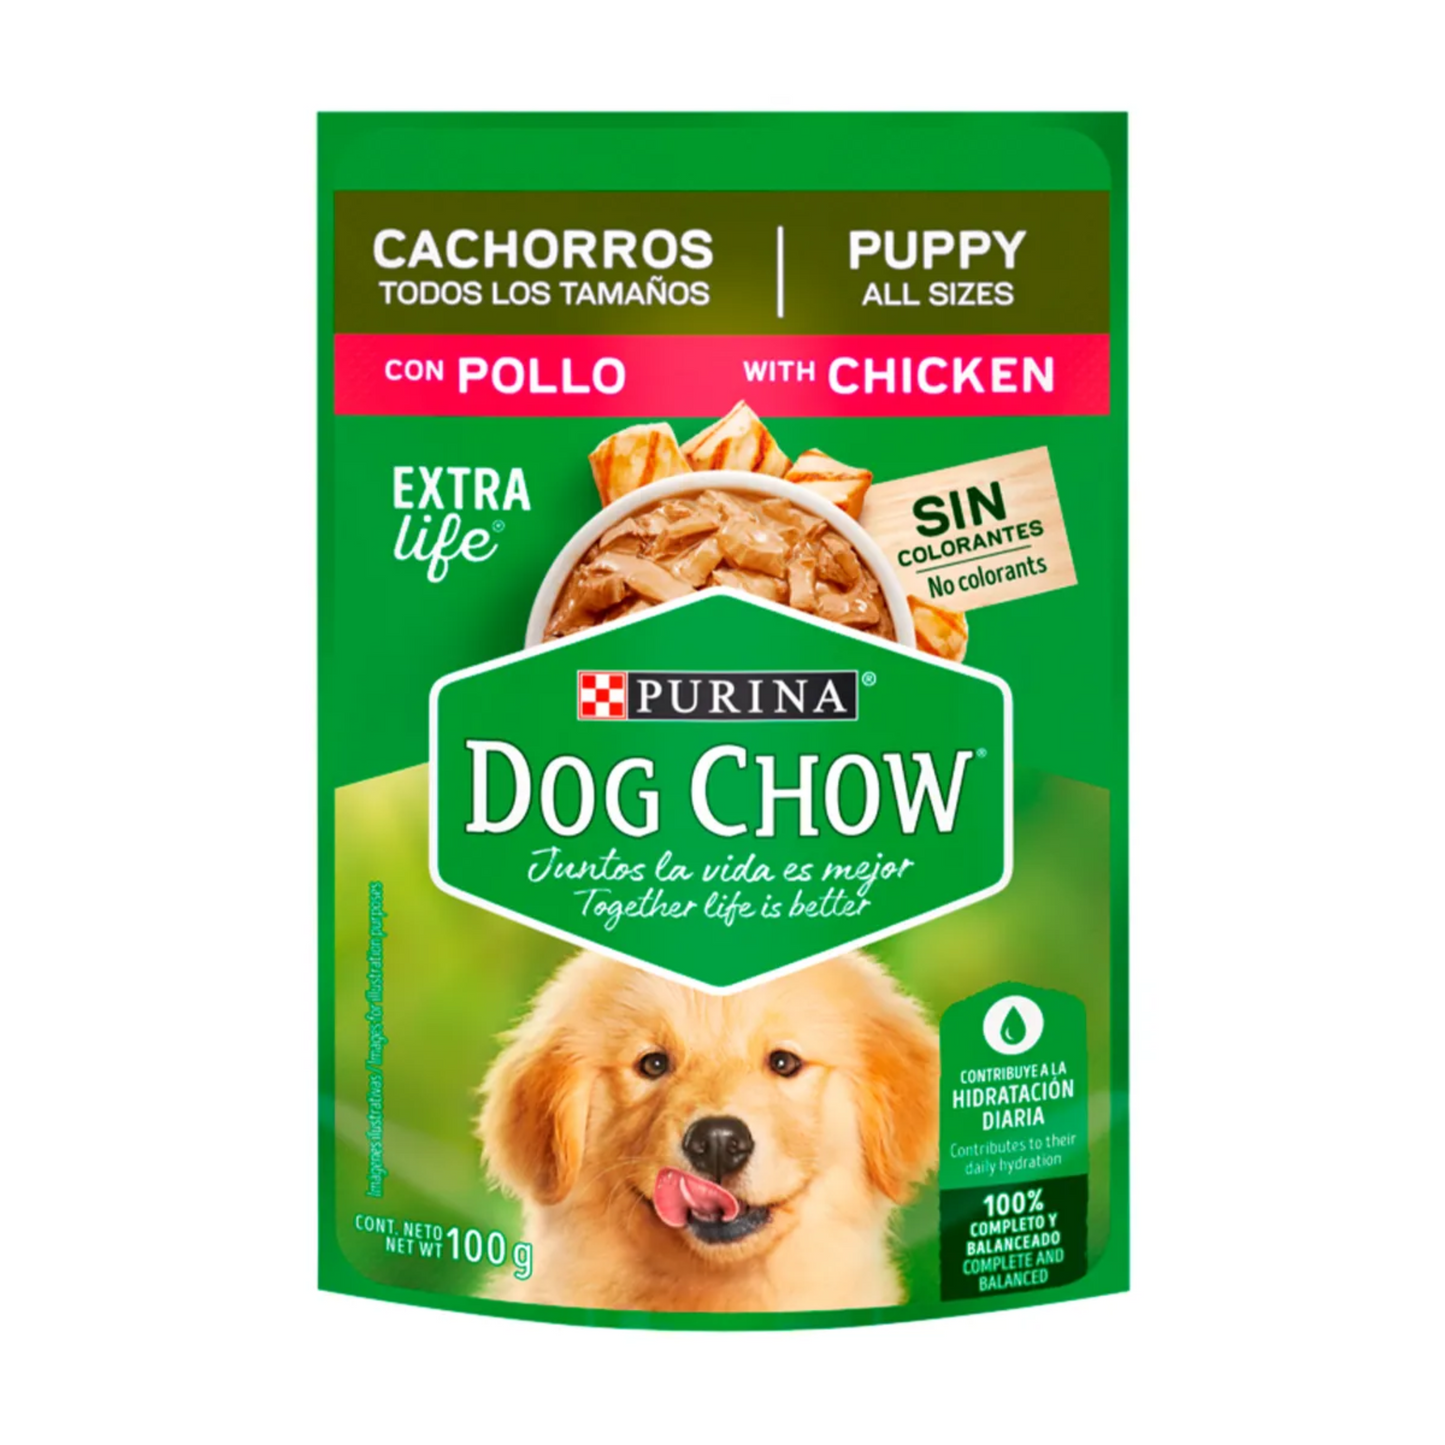 Dog Chow 12 pack cachorro